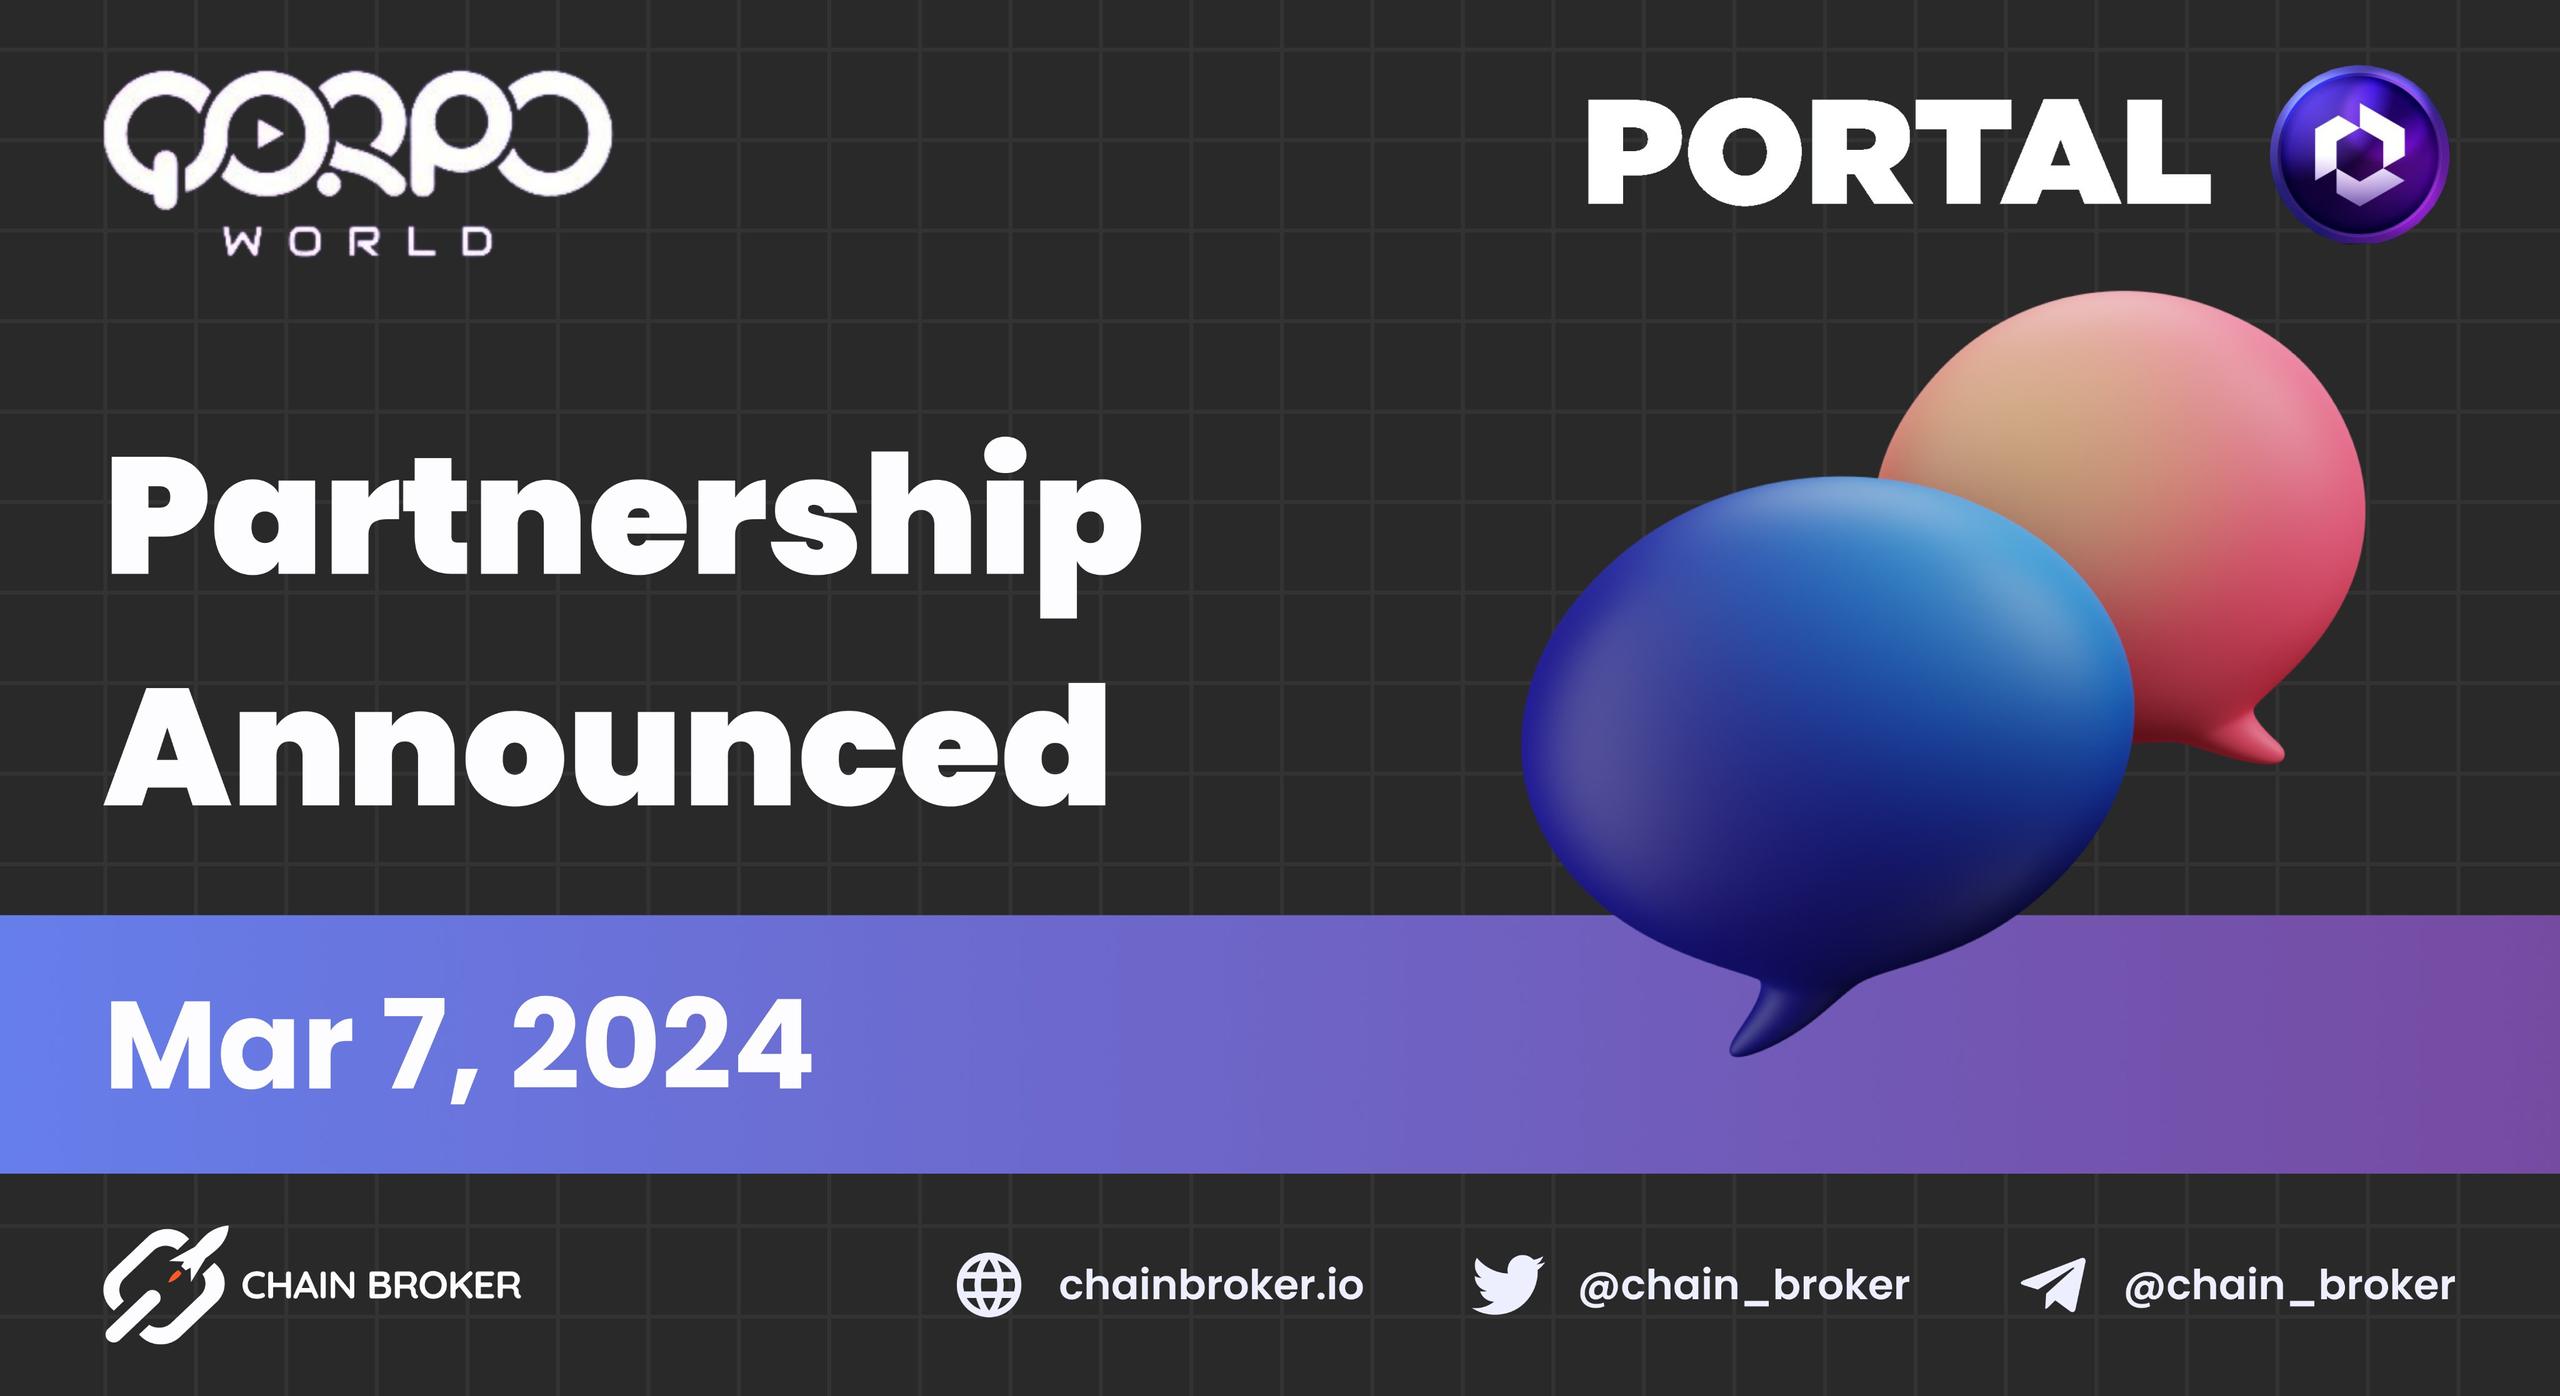 QORPO WORLD announces partnership with Portal